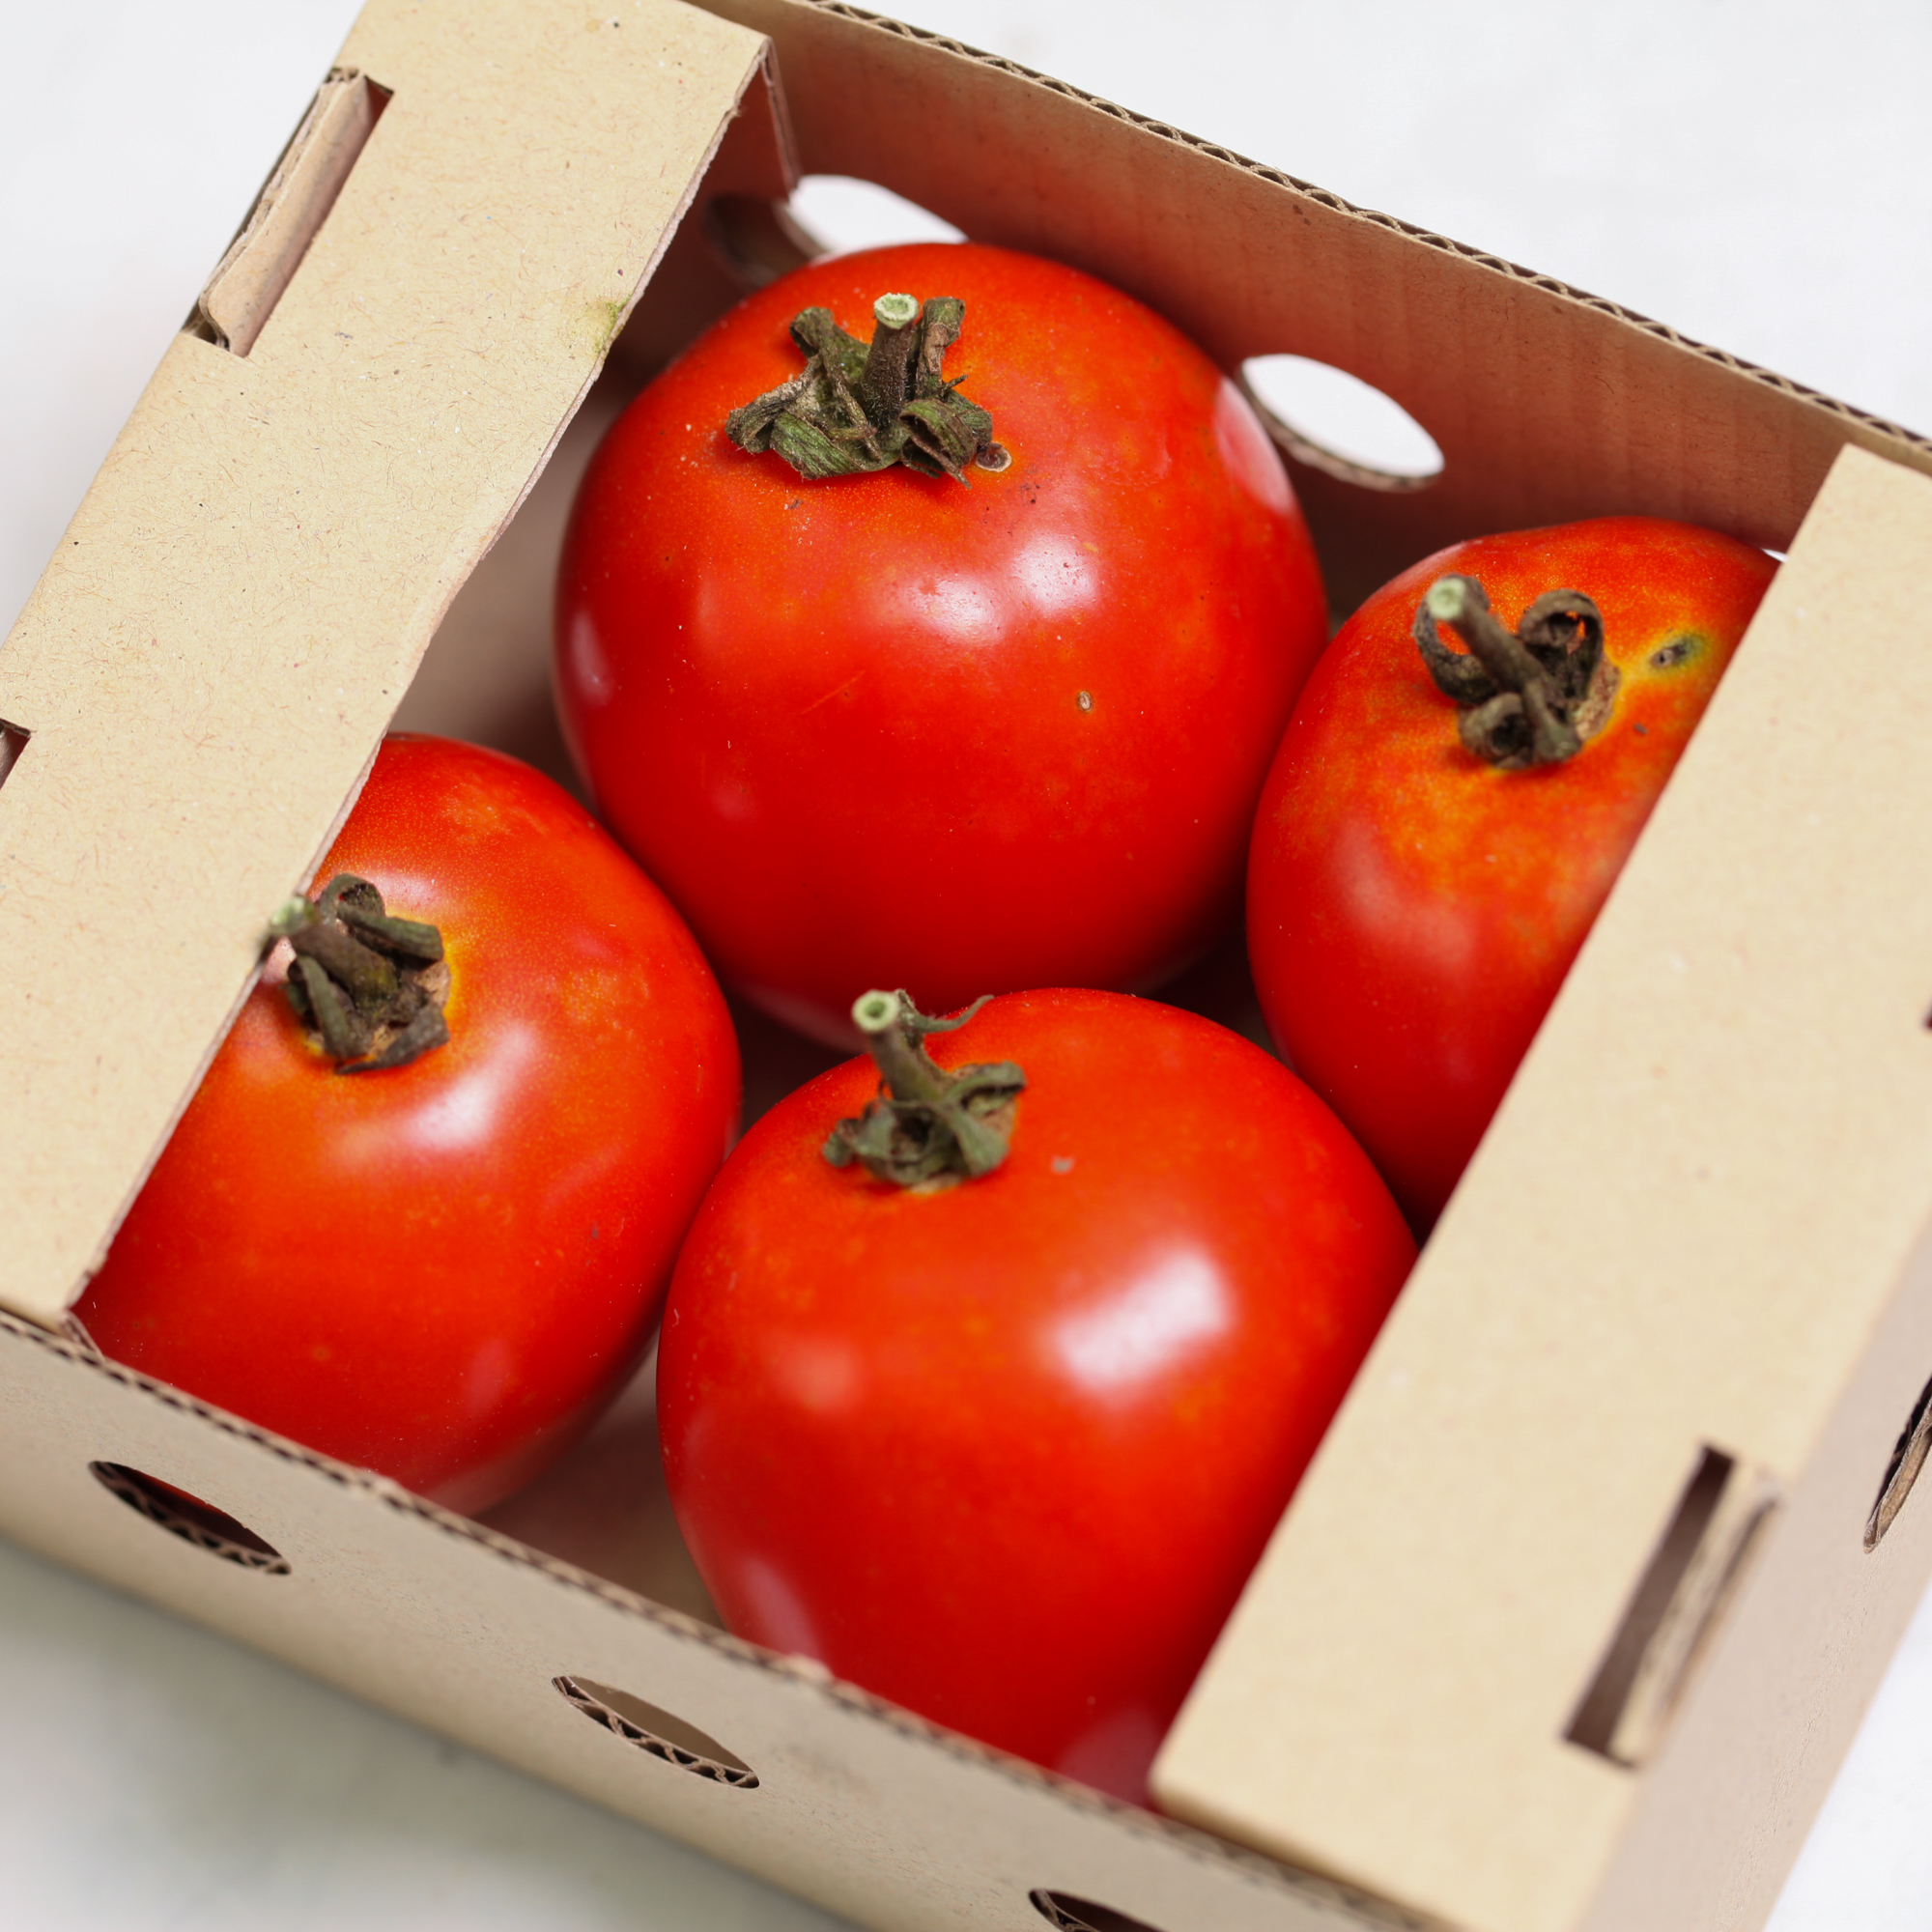 Organic Roma Tomatoes